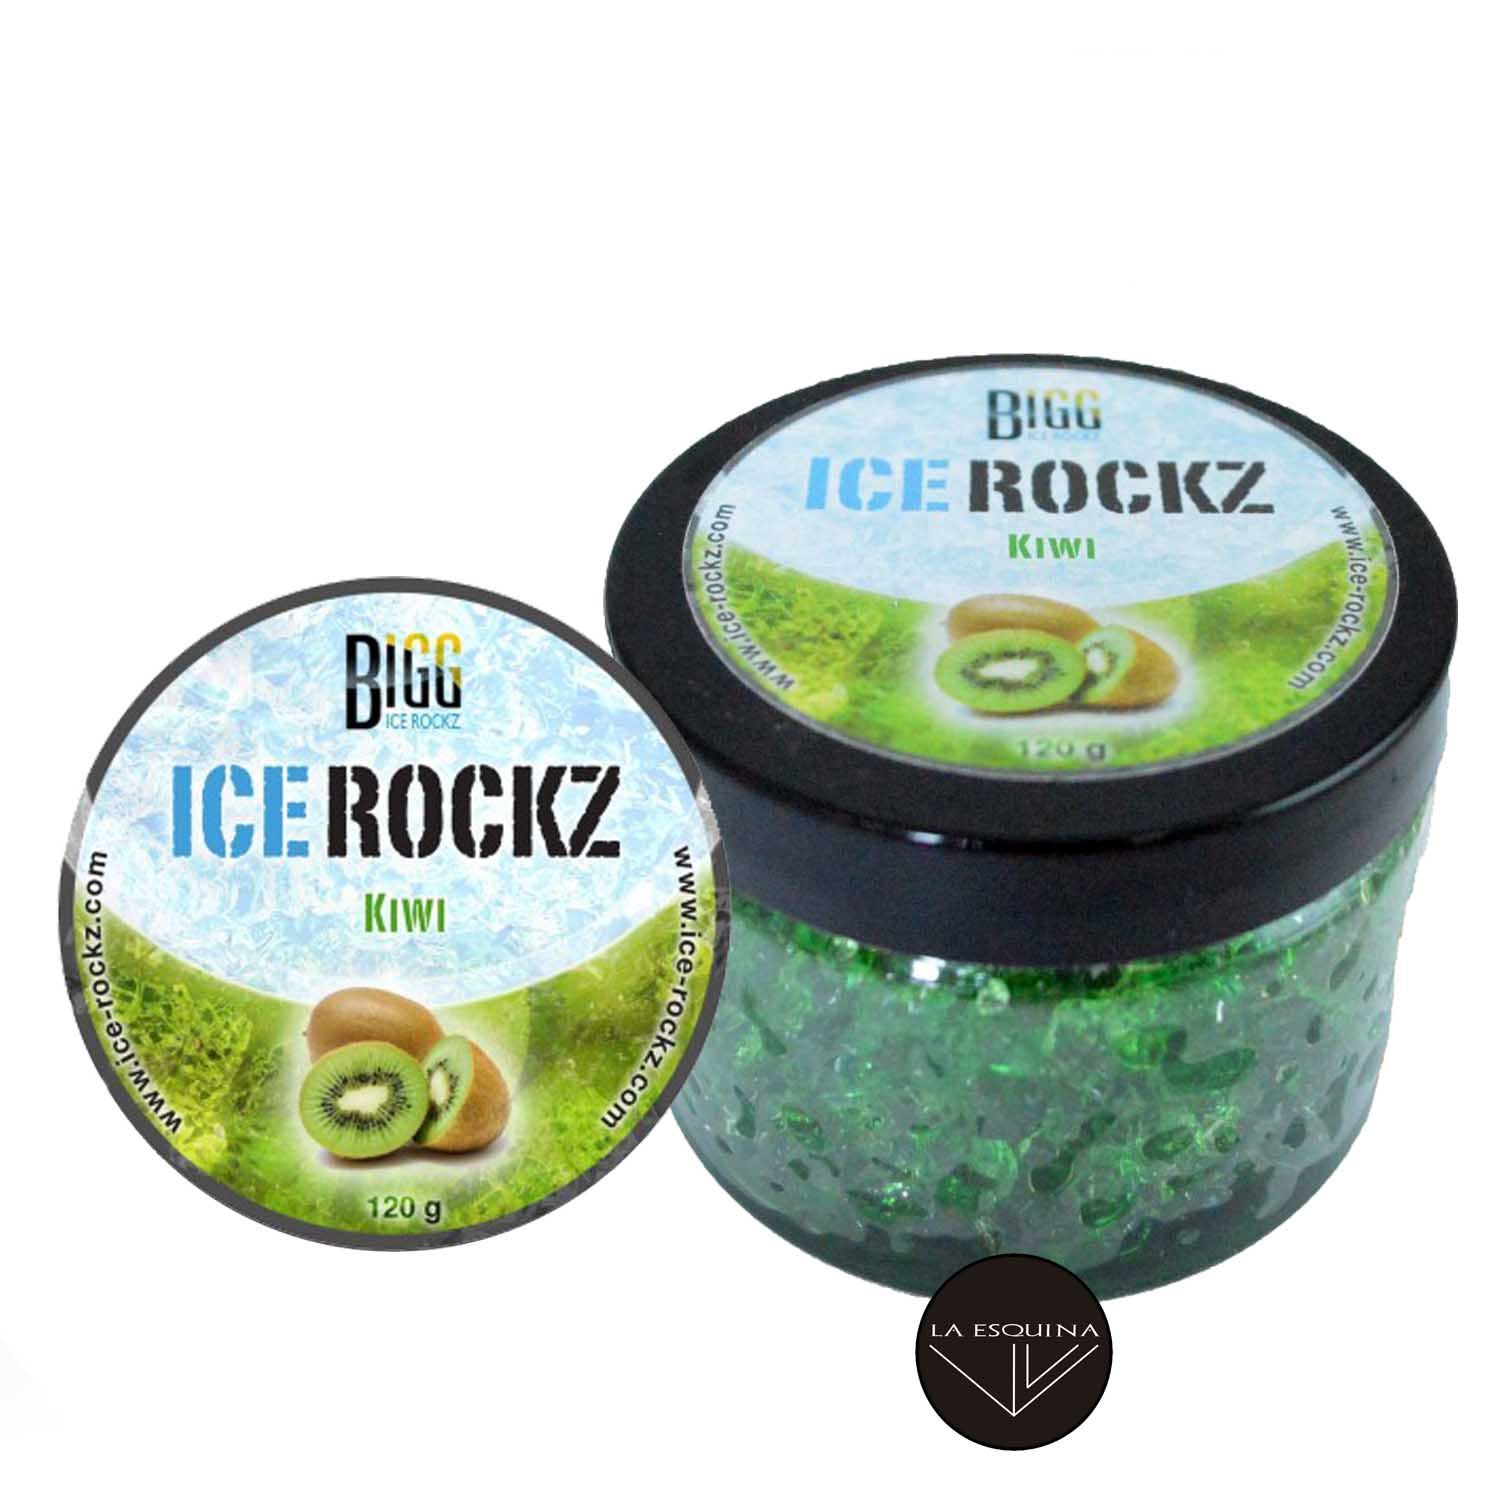 Gel Rock de Cachimba BIGG ICE ROCKZ – 120 g. – Kiwi